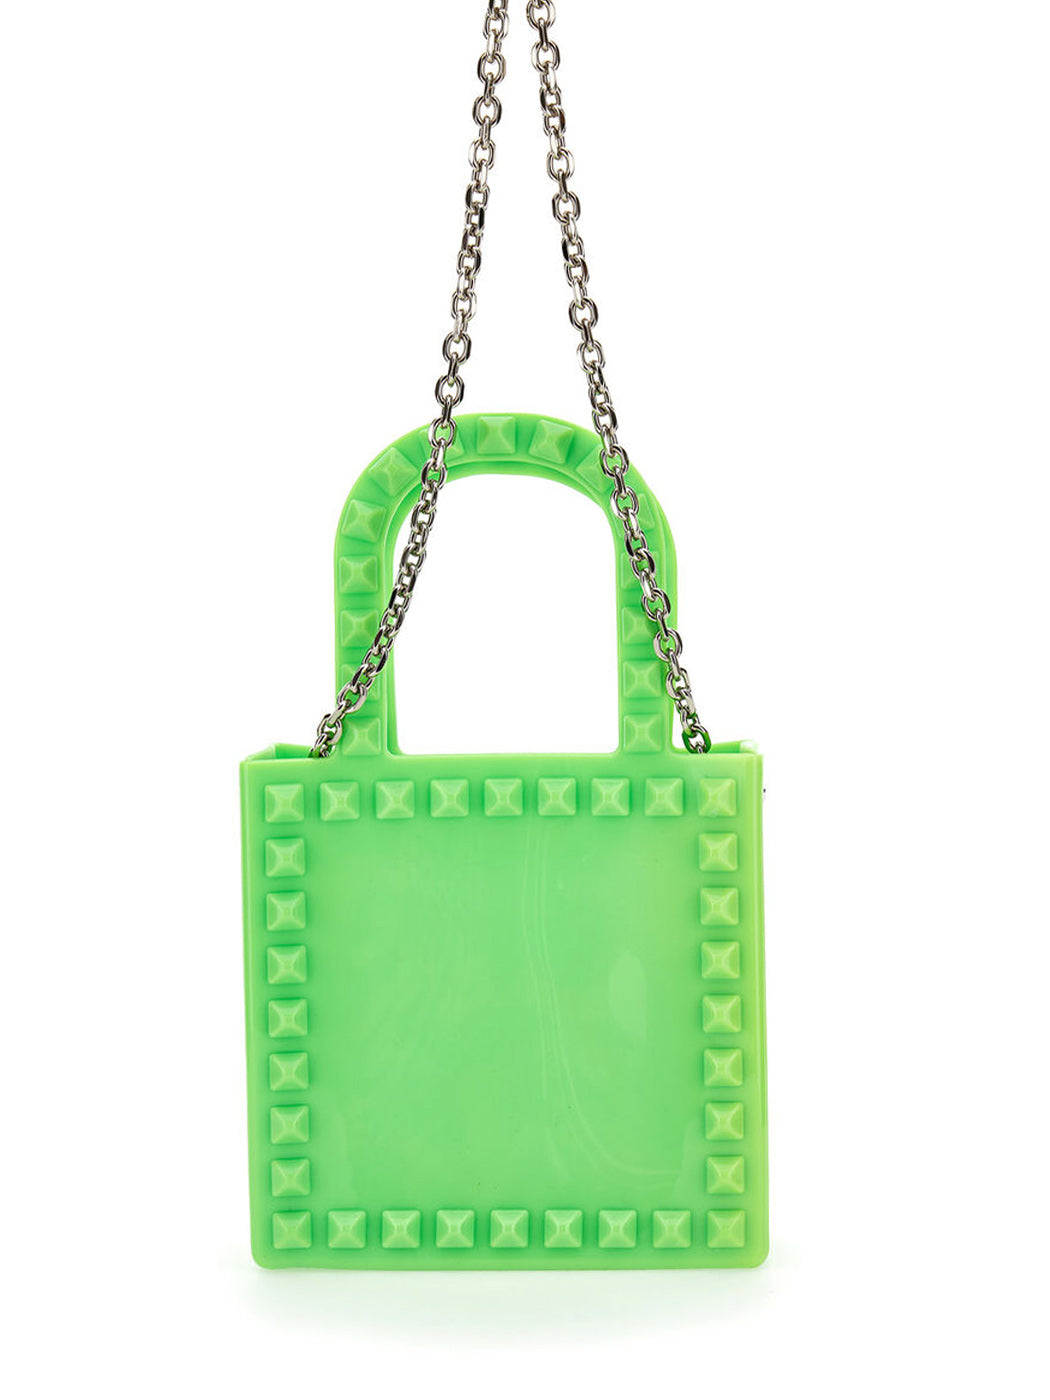 MONNALISA green pvc handbag for girl-17A009